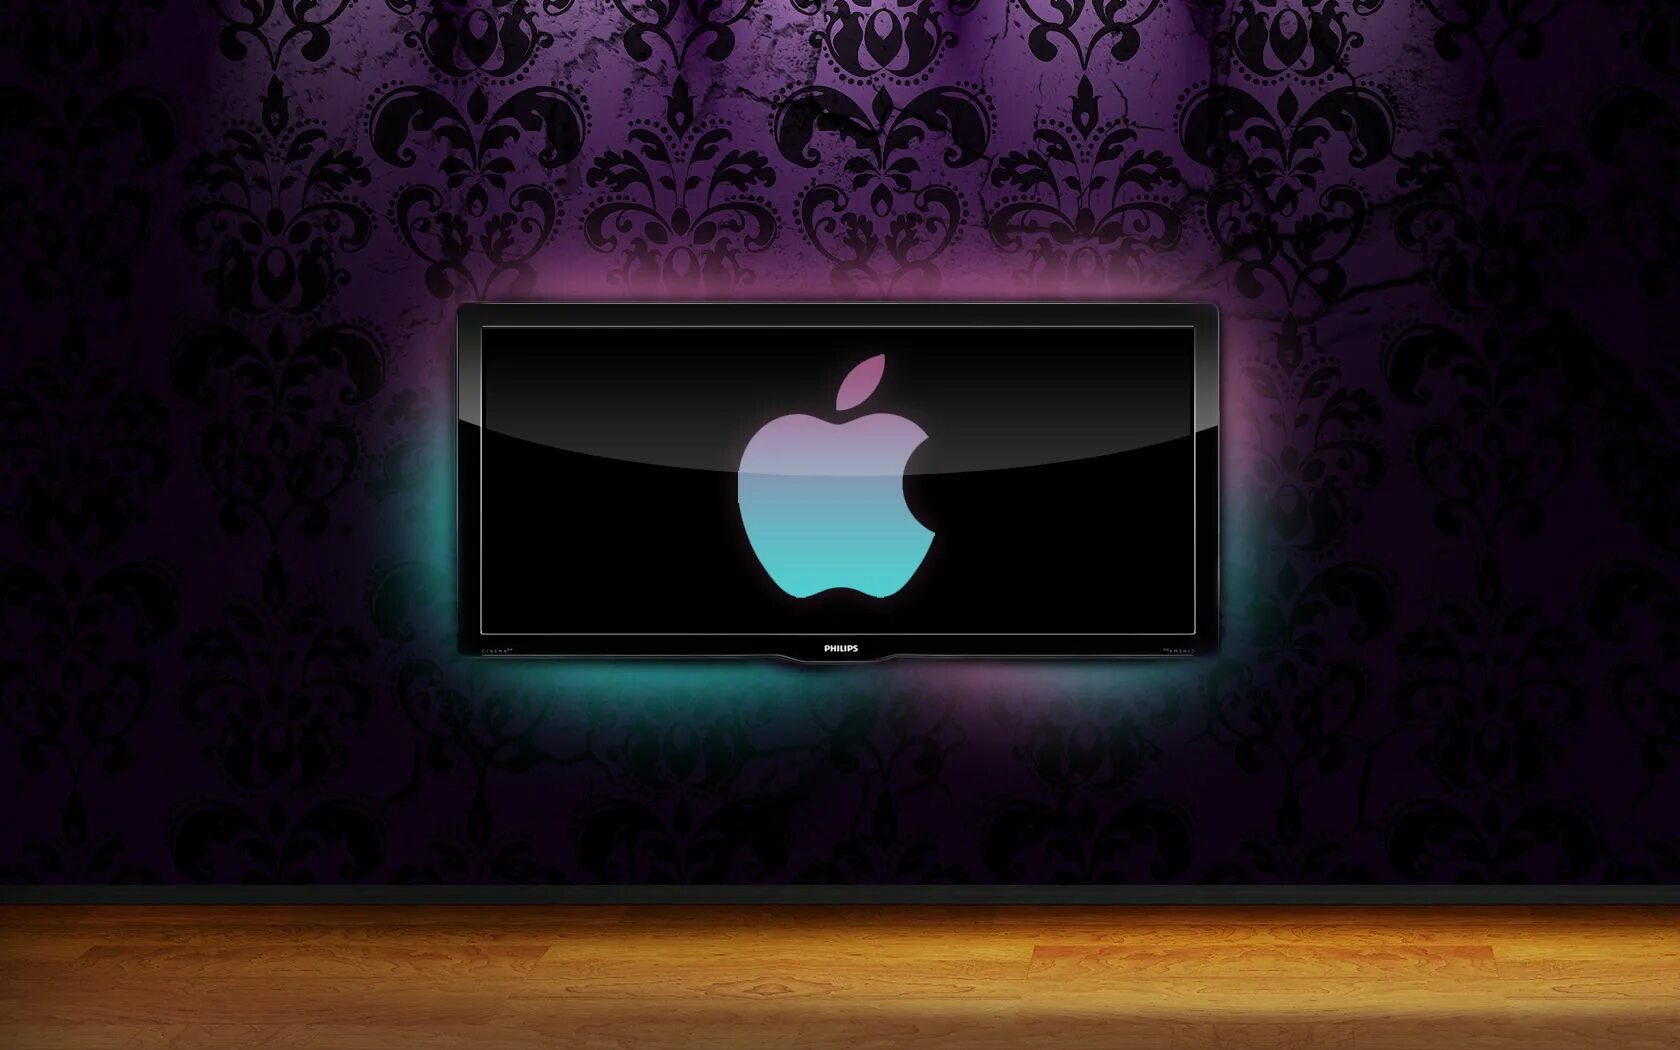 Телевизор канди андроид. Живые обои на телевизор. Обои для андроид телевизора. Заставка на экран ноутбука. Обои Apple TV.